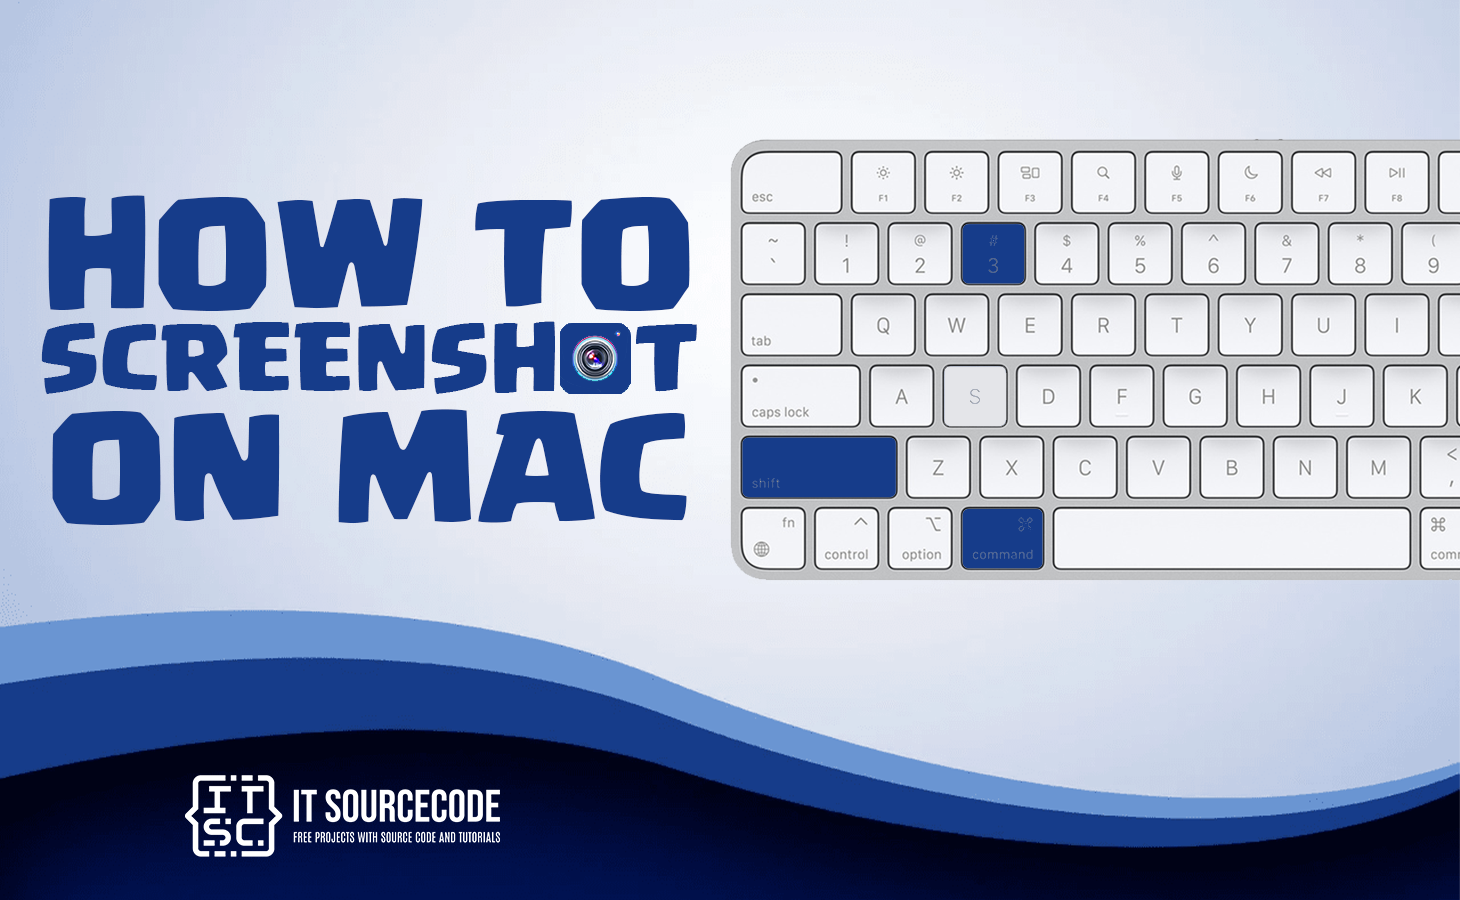 HOW TO SCREENSHOT ON MAC